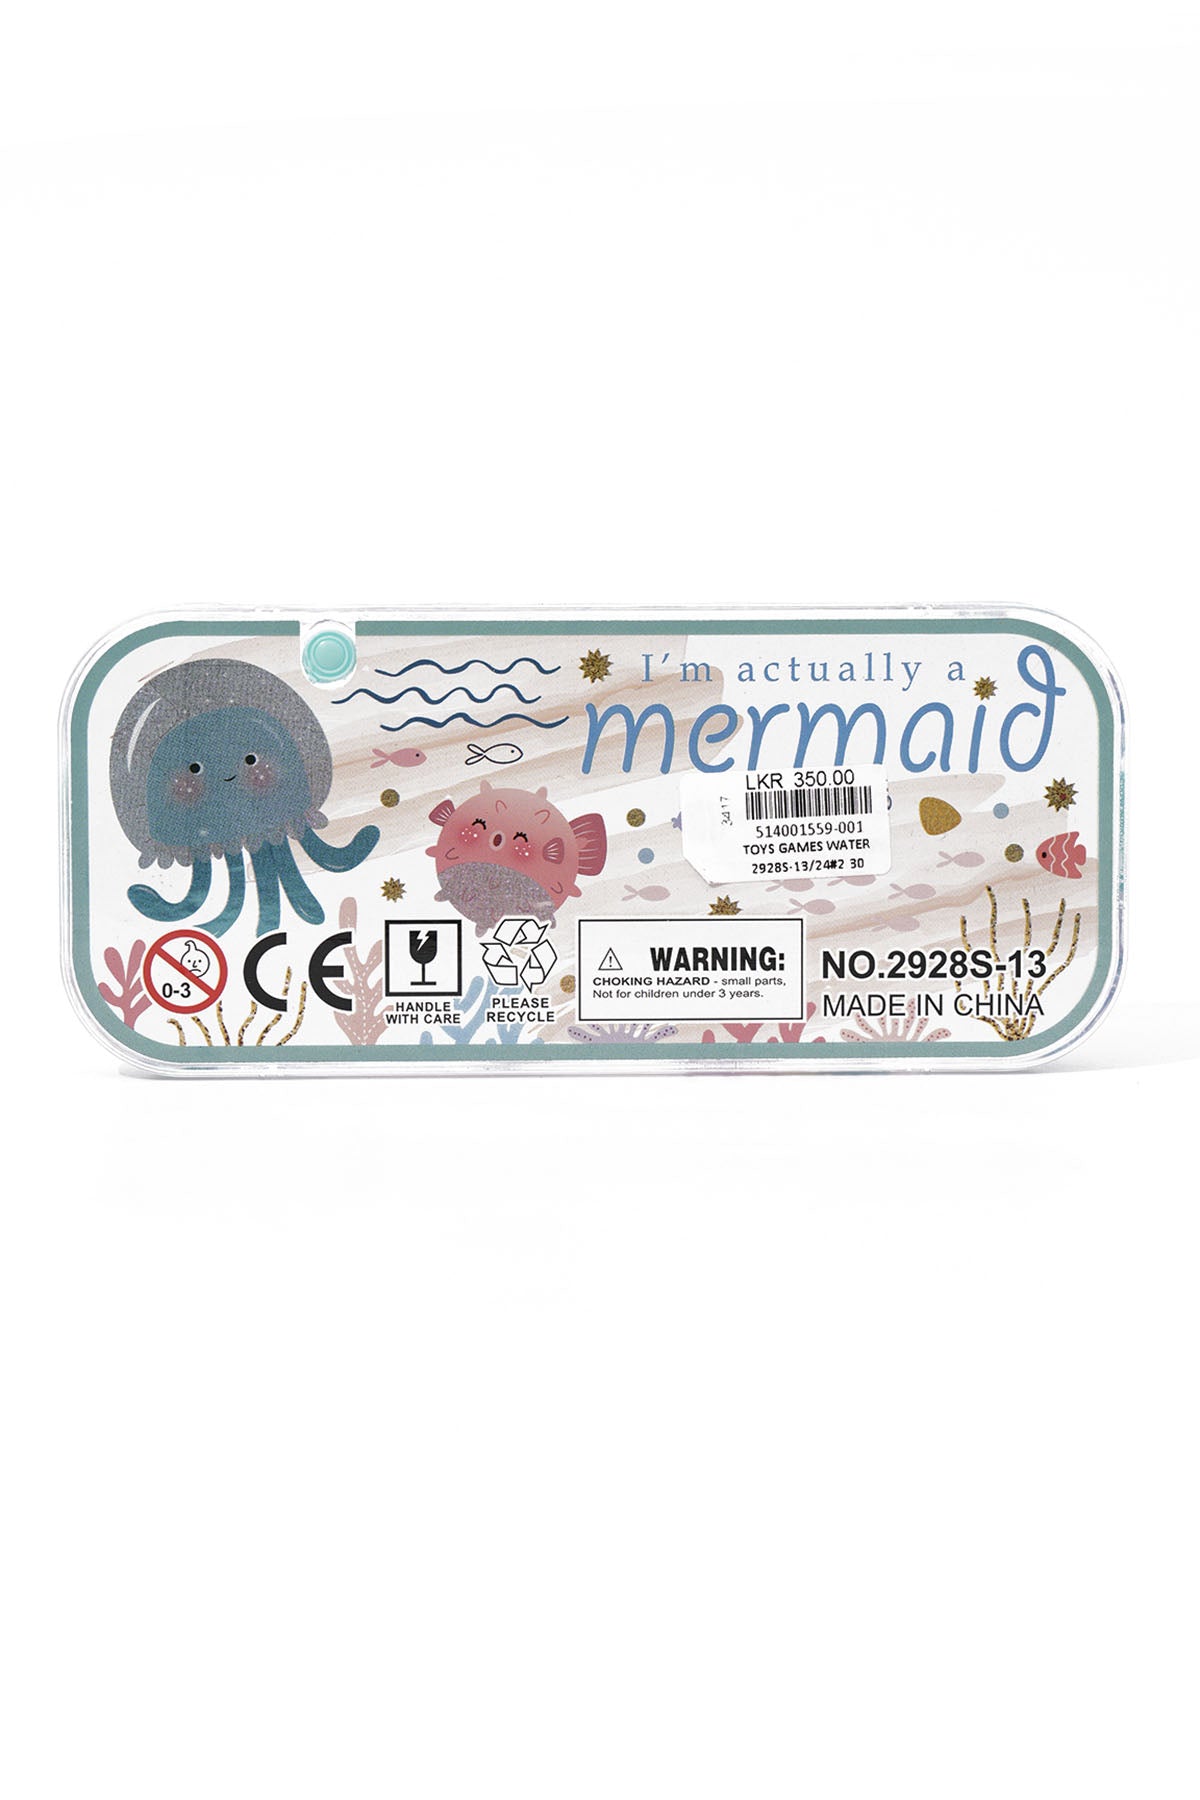 Mermaid Water Ring Game Toy